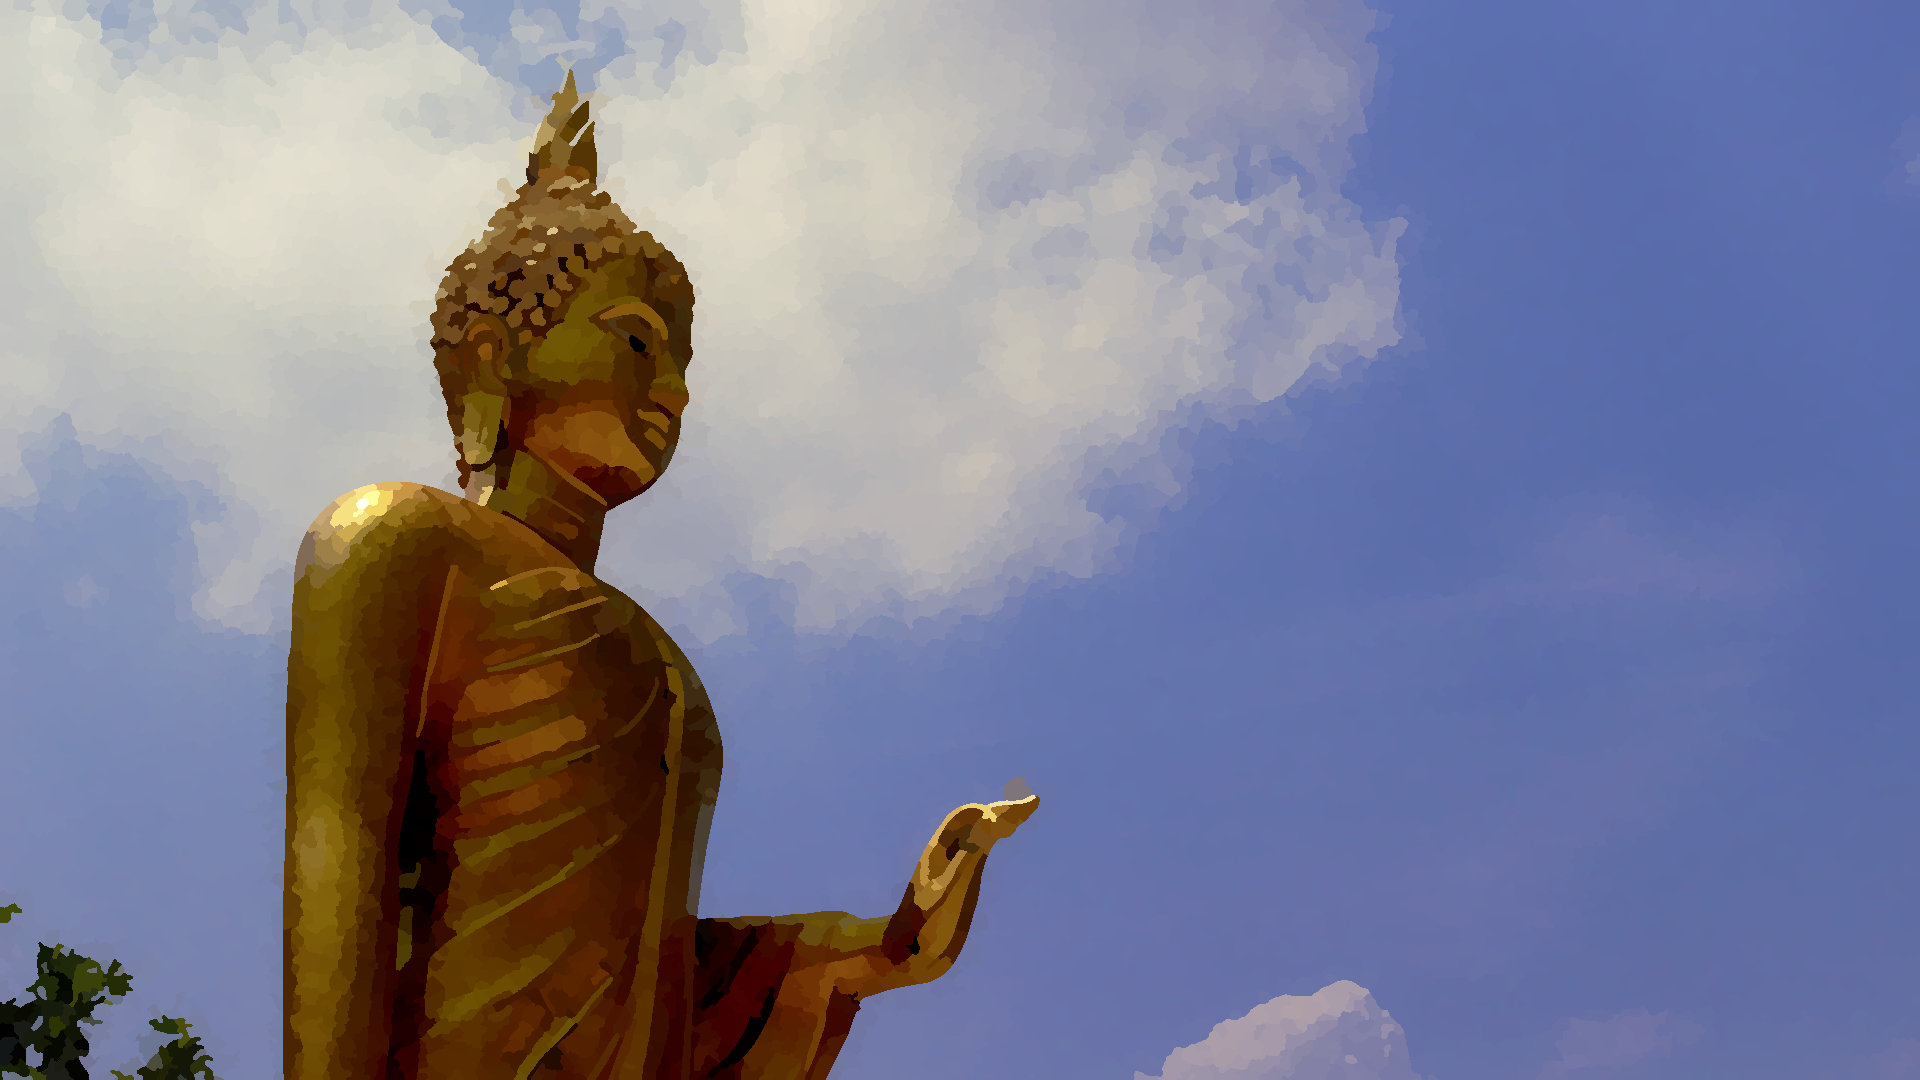 The Buddha and the sky 7